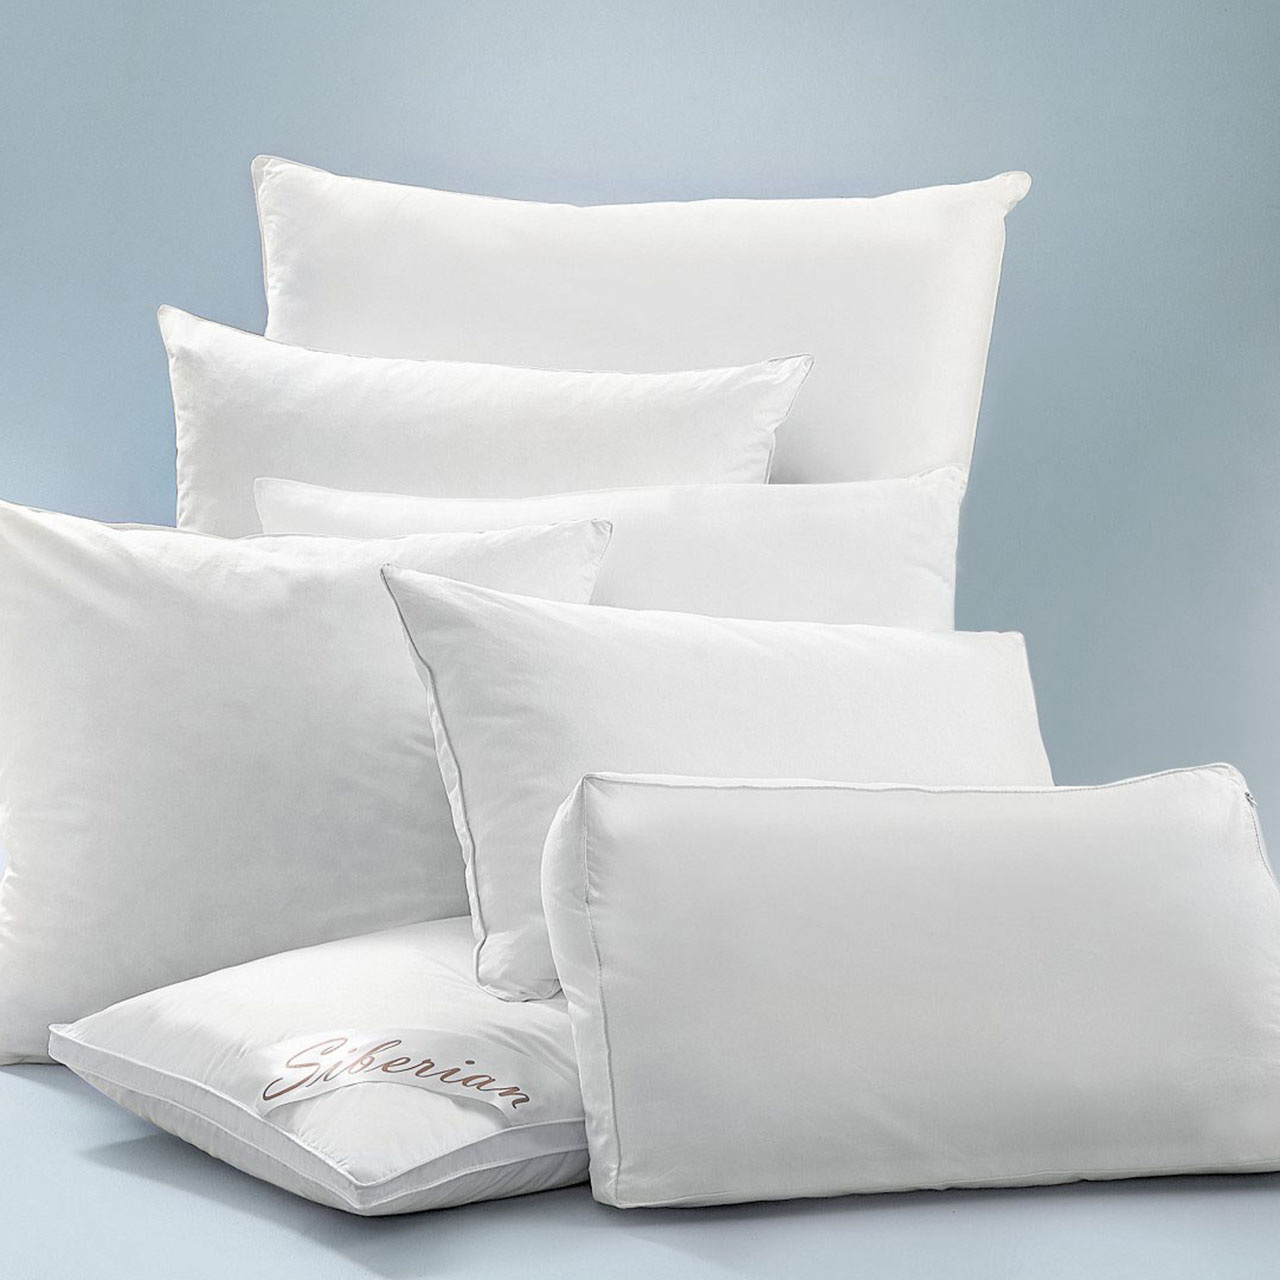 Luxury Legends Goose Down Surround Pillow